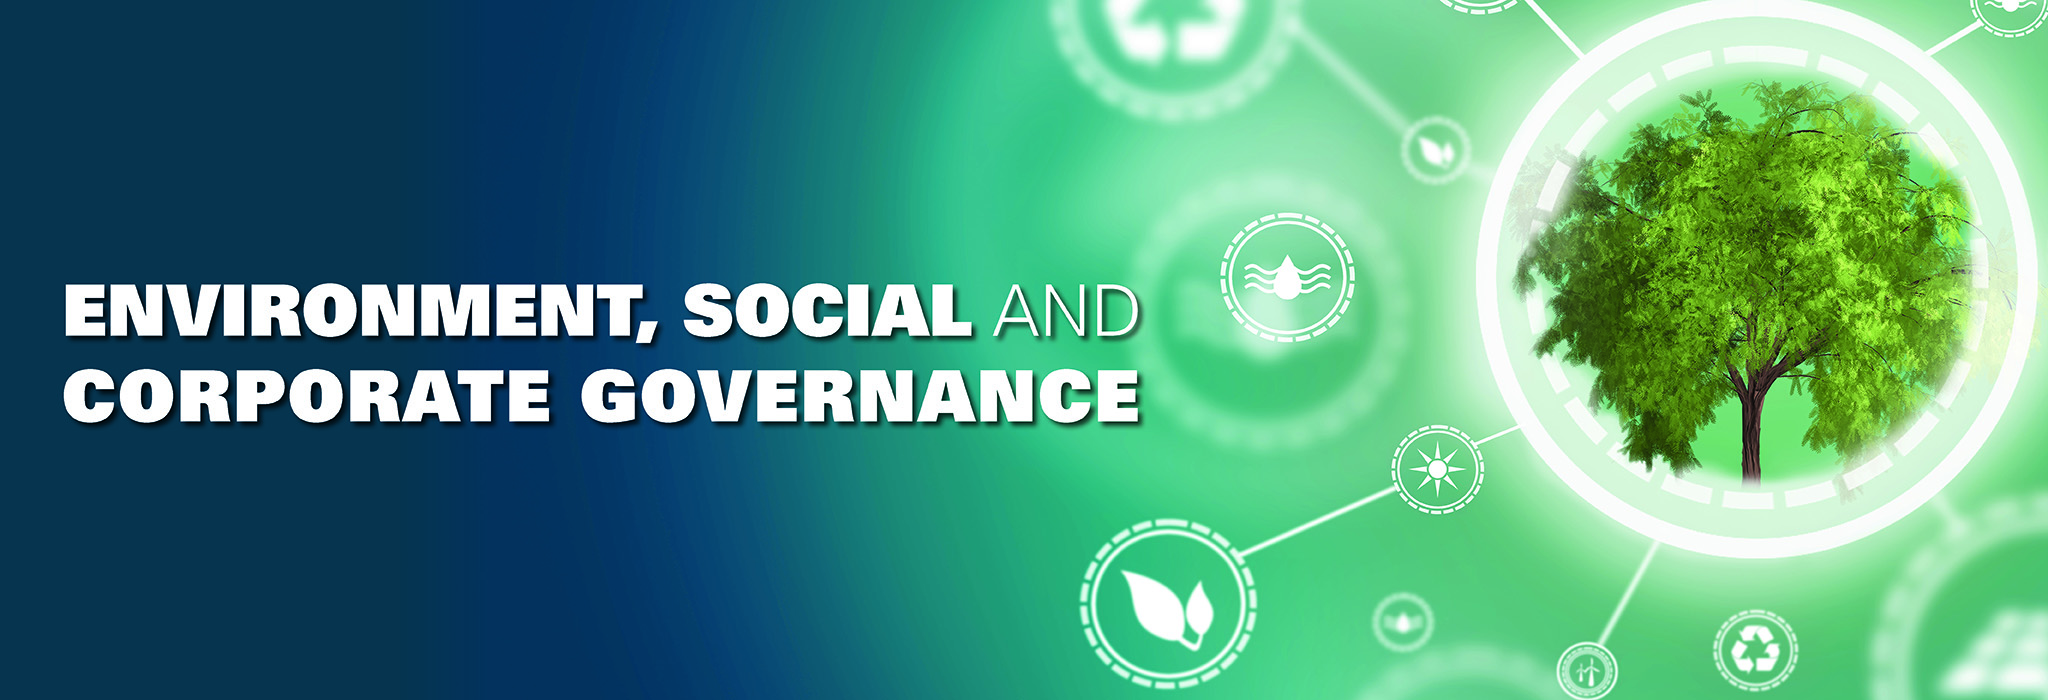 Environmental, social, corporate governance banner